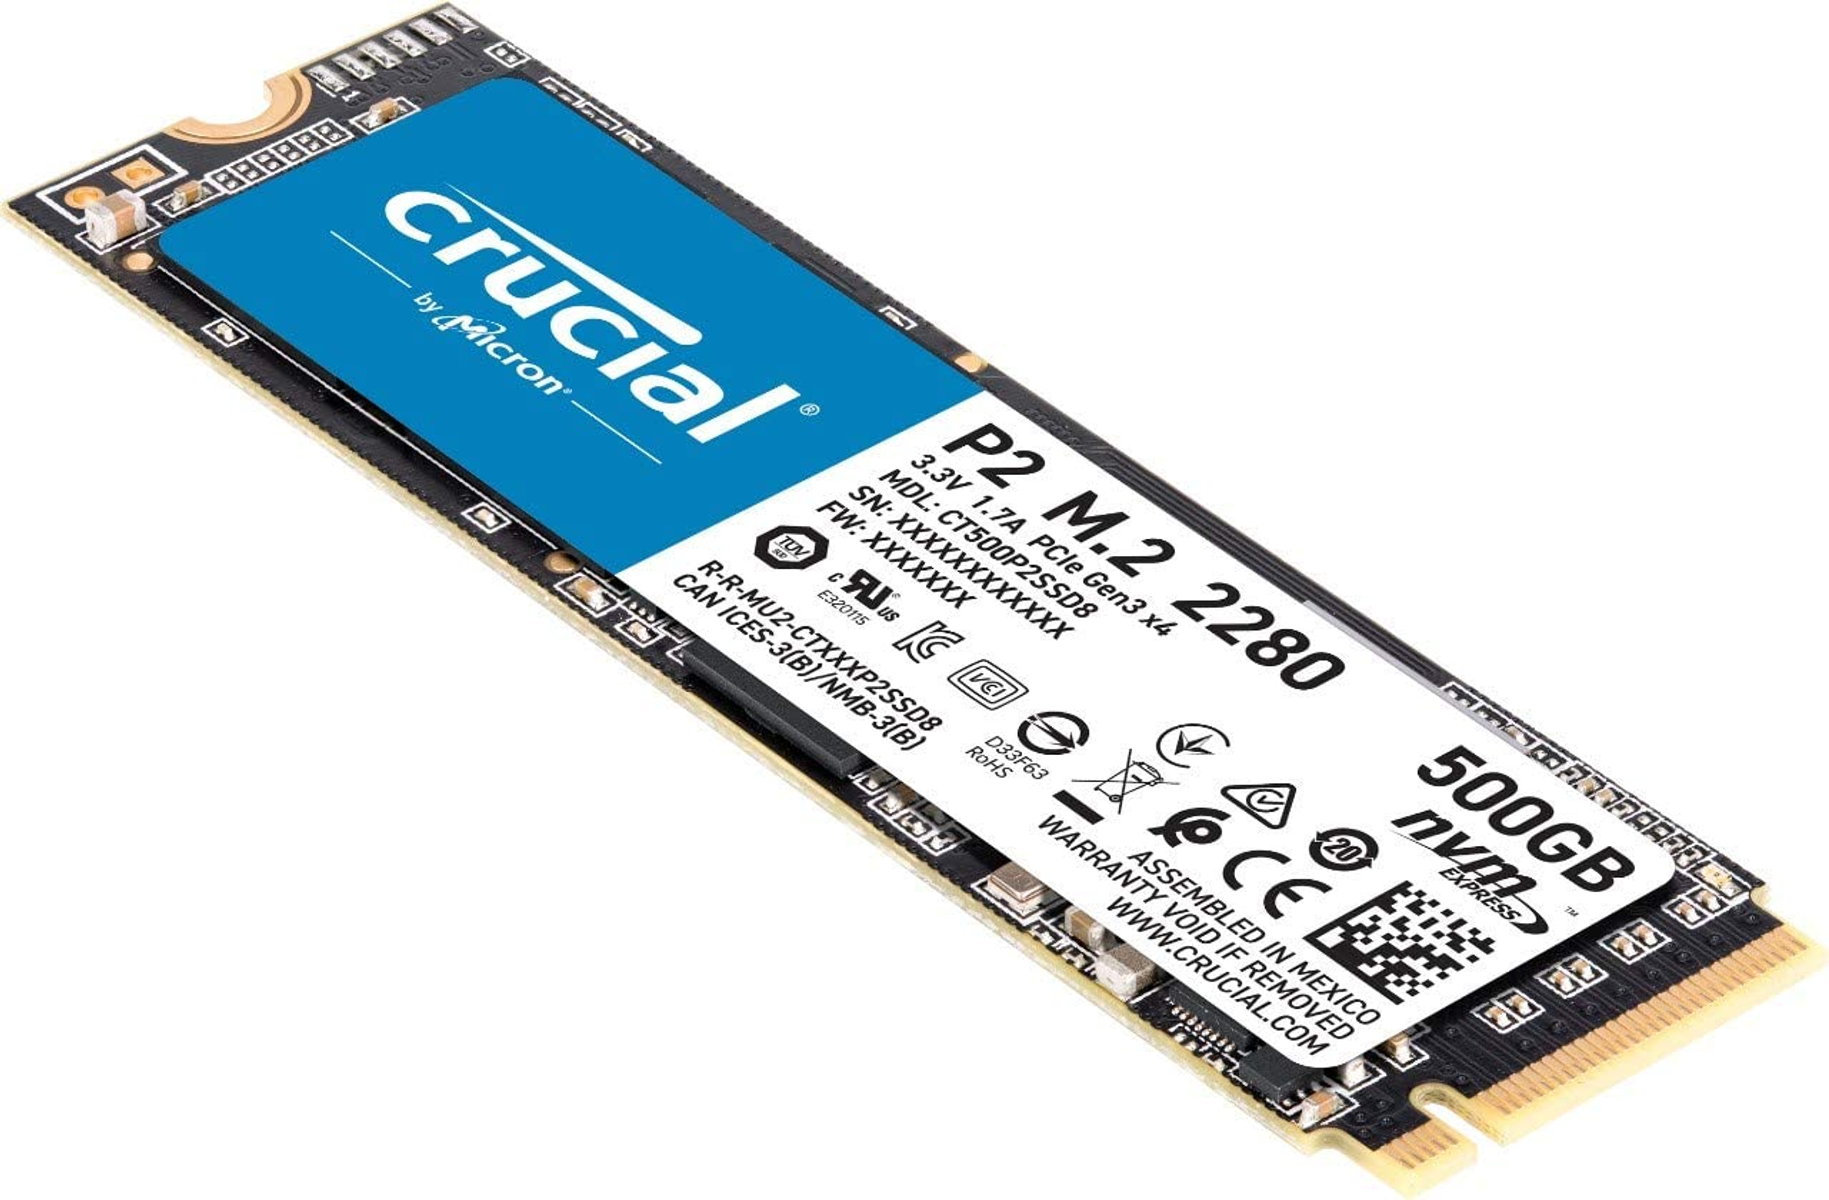 CRUCIAL Crucial CT500P2SSD8P2 500GB SSD (internes Gen PCIe M.2 SSD, 2300 NVMe GB, 500 940 intern Write Read, MB/s 3 MB/s M.2